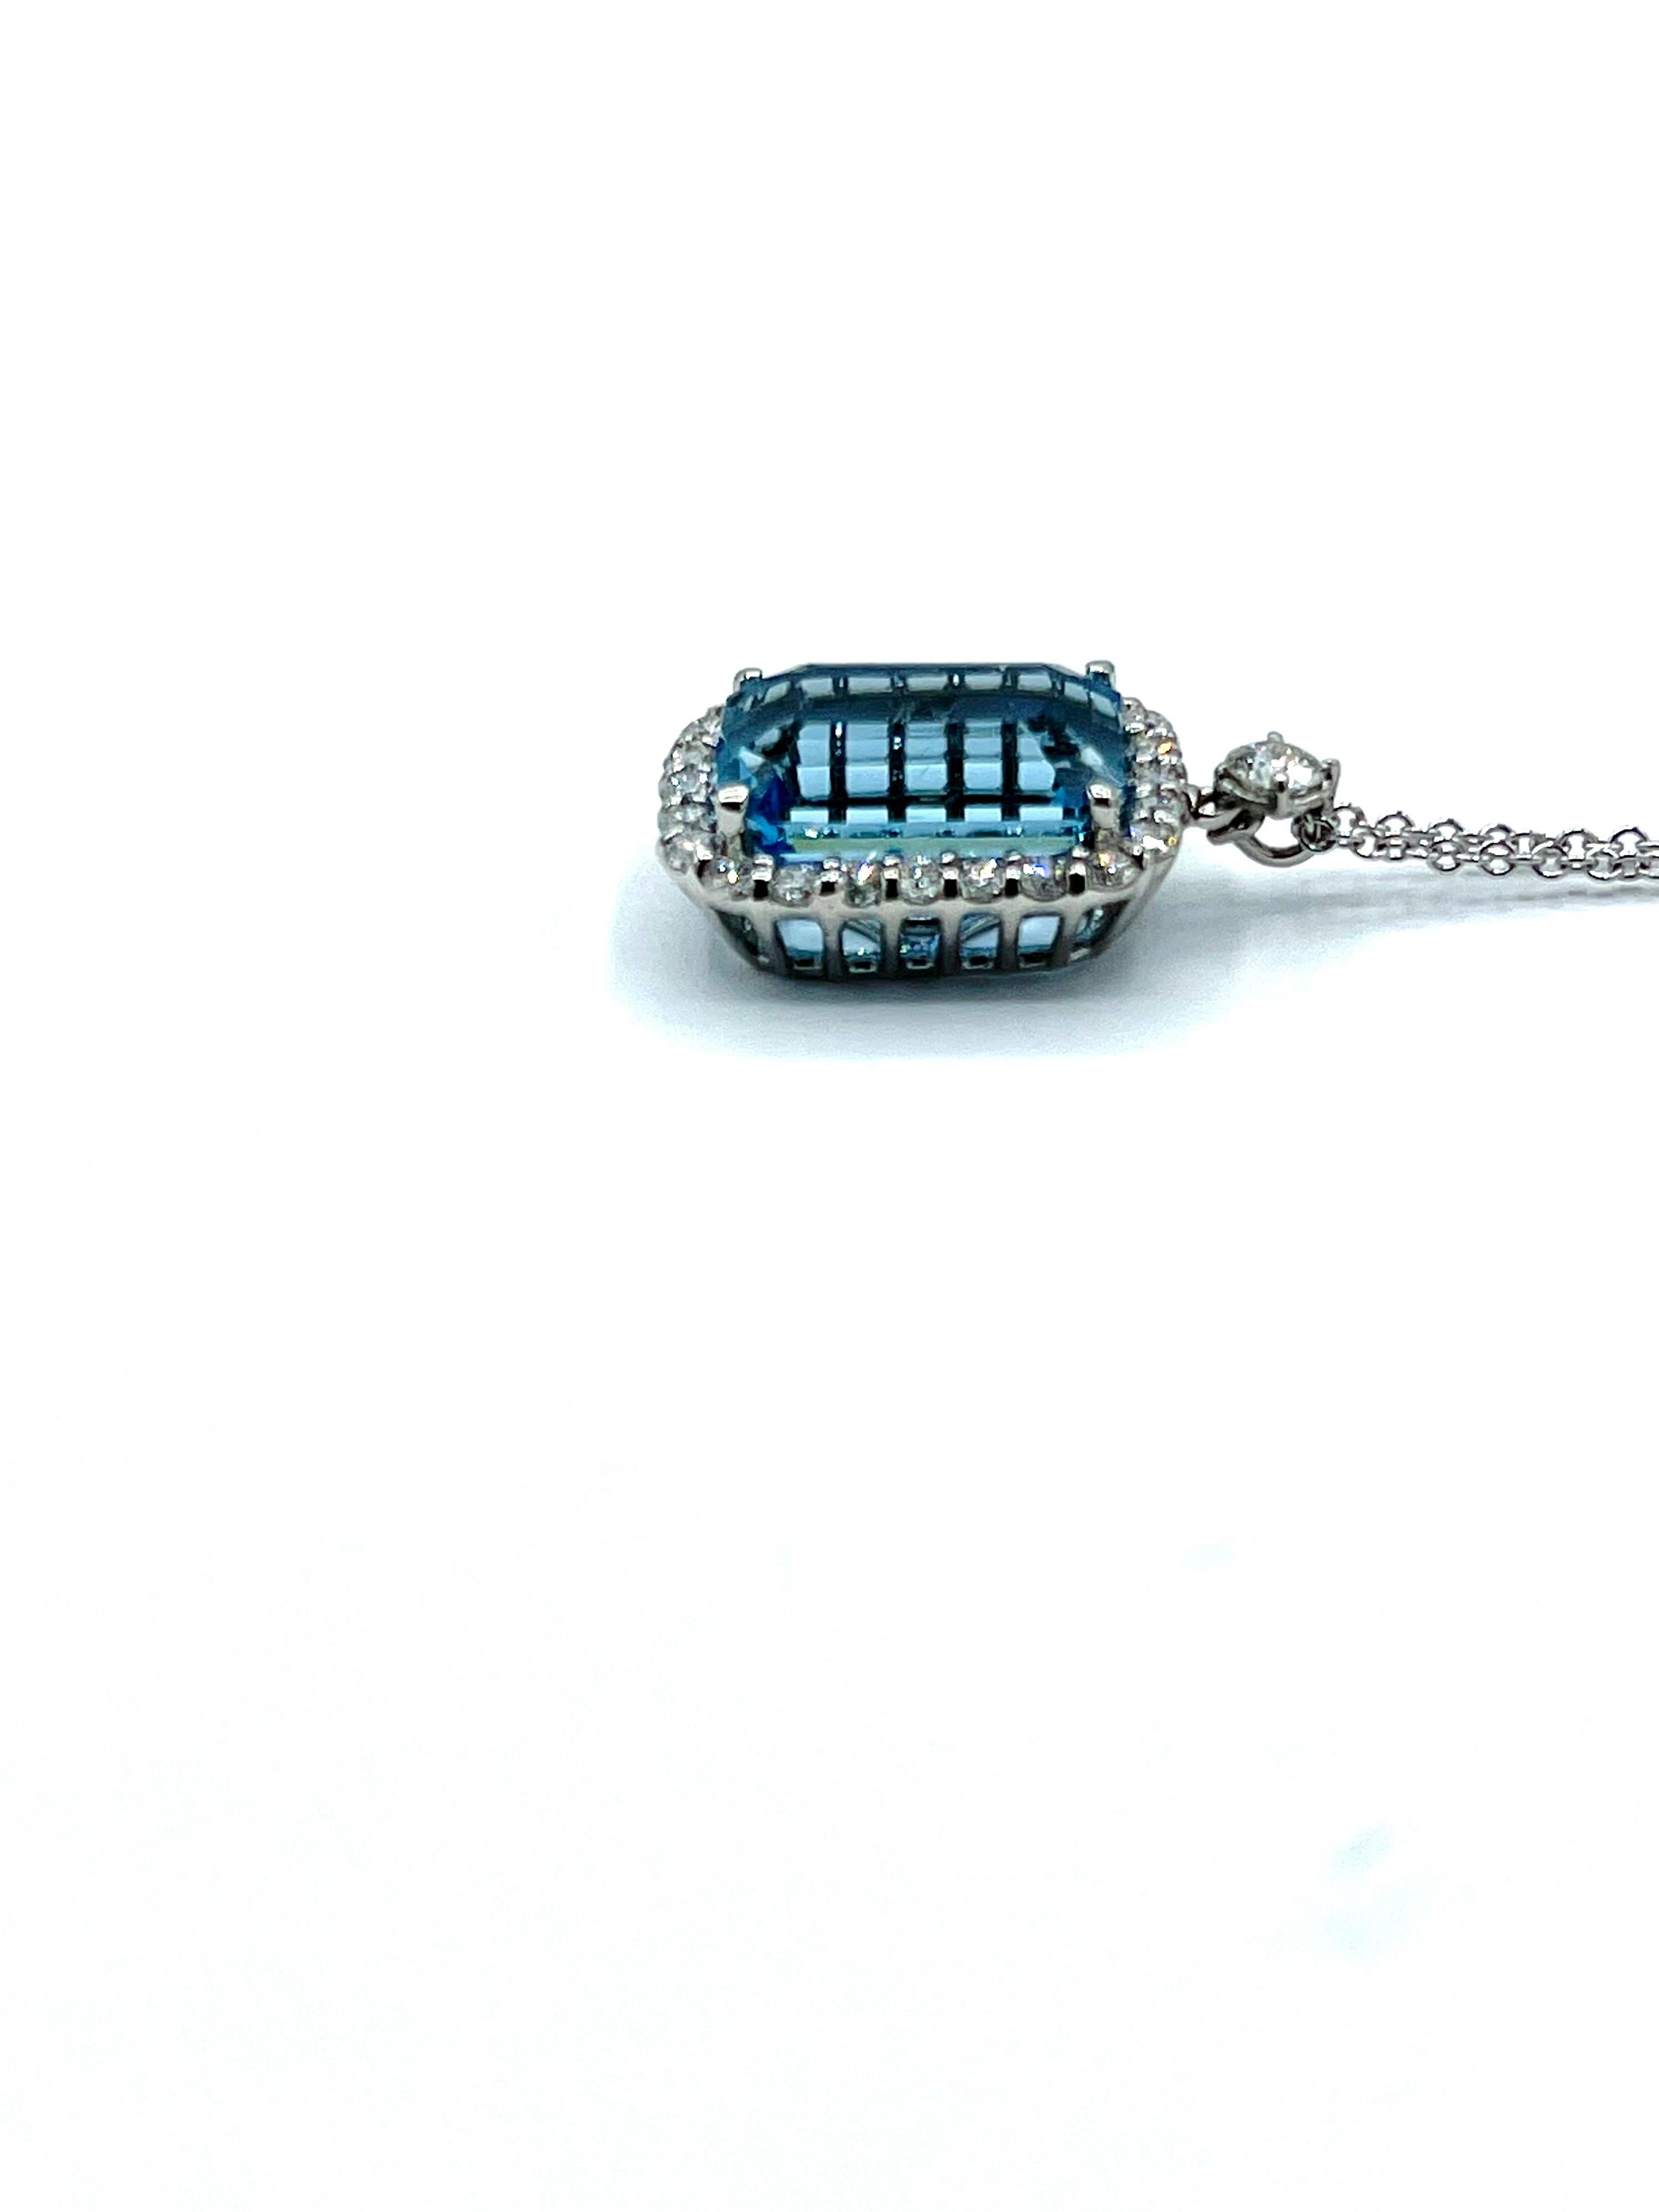 Women's or Men's 6.25 Carat Emerald Cut Aquamarine and Diamond 18K Pendant Necklace